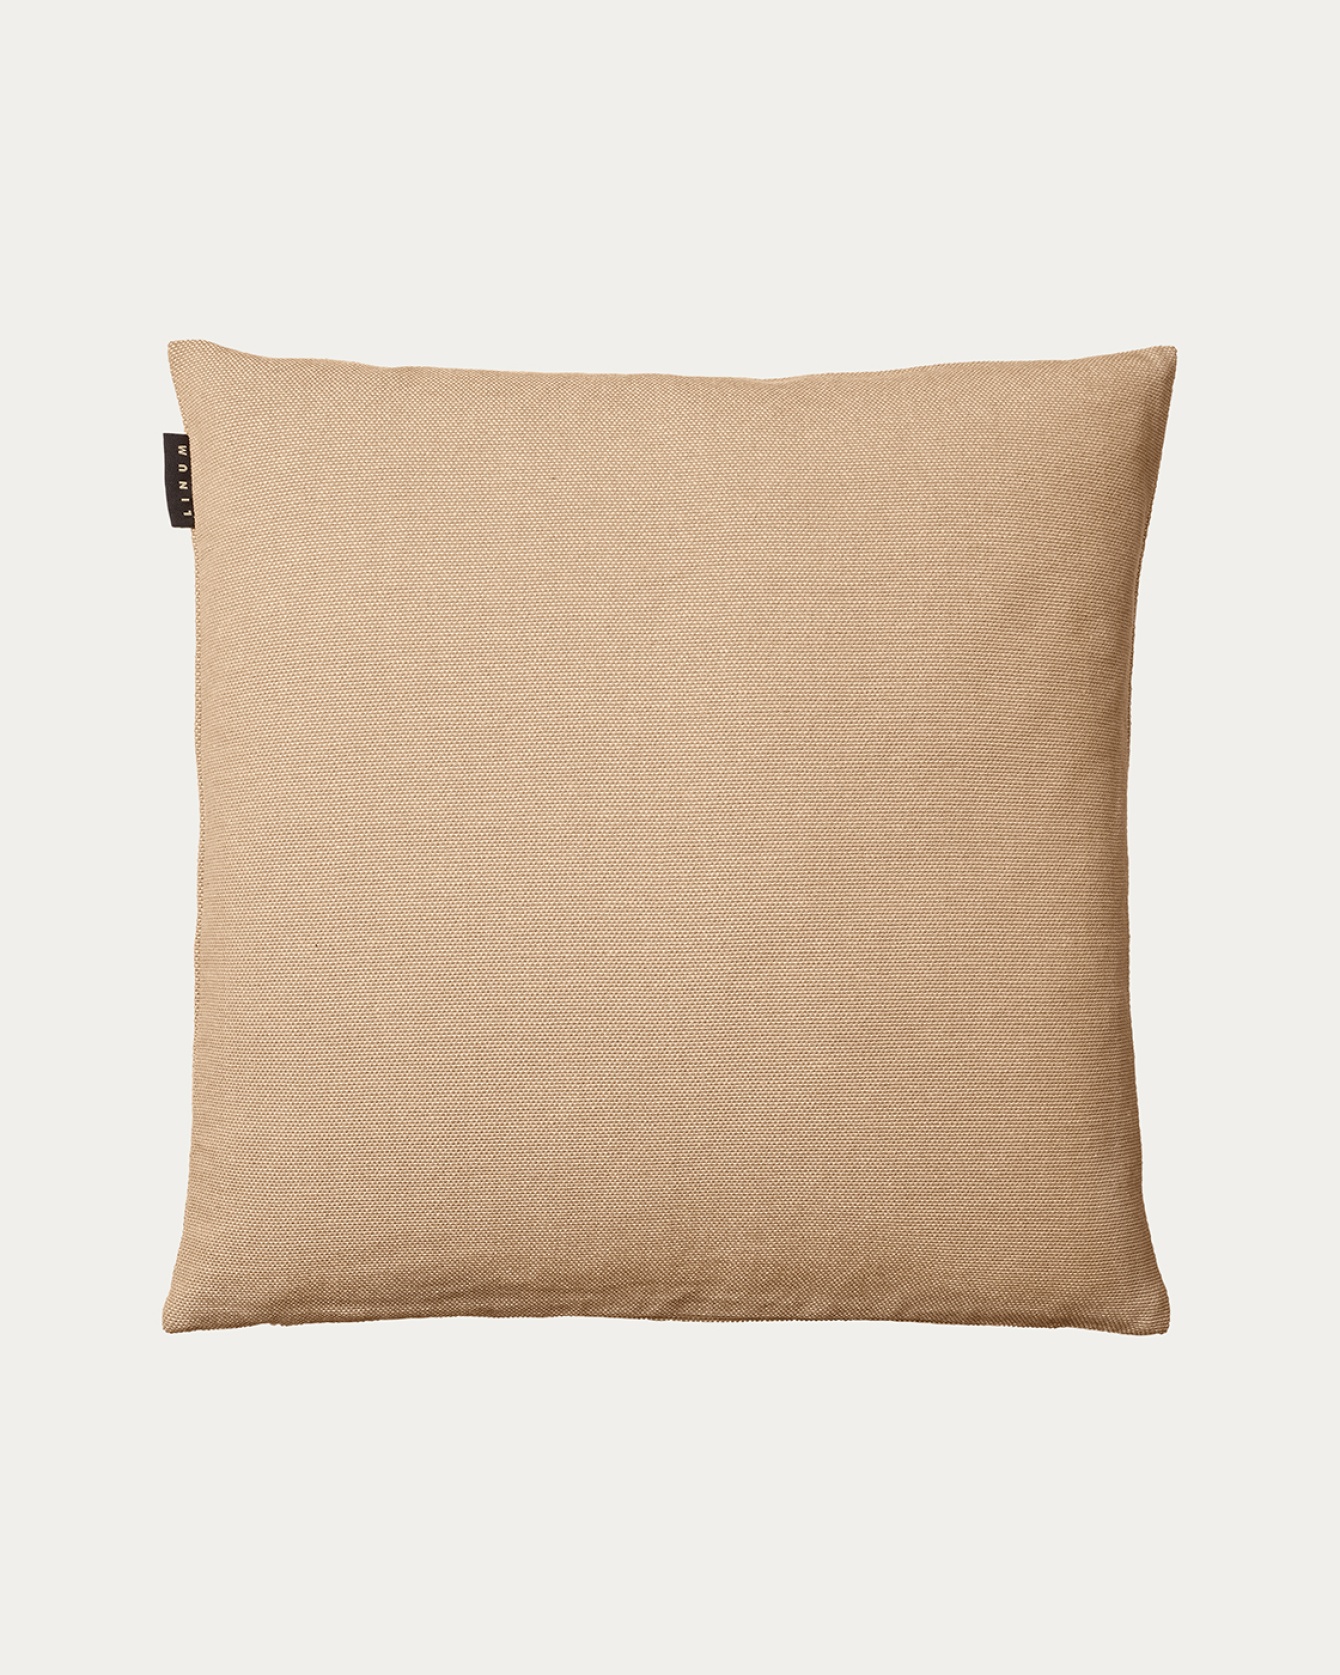 PEPPER Cushion cover 50x50 cm Camel brown